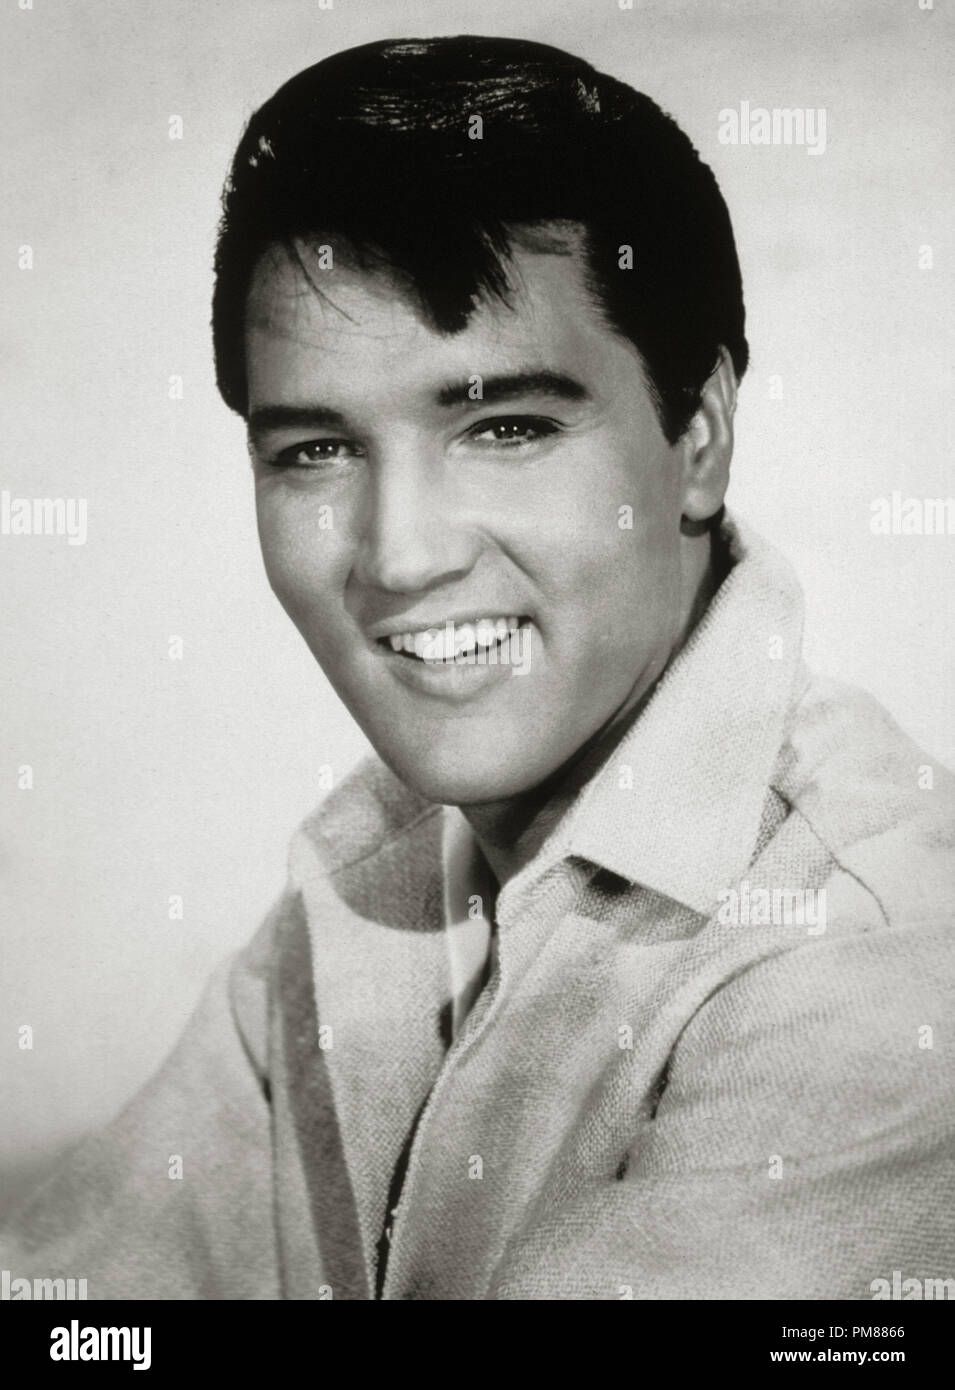 (Archivierung klassische Kino - Elvis Presley Retrospektive) Elvis Presley, ca. 1966 Datei Referenz # 31616 014 THA Stockfoto